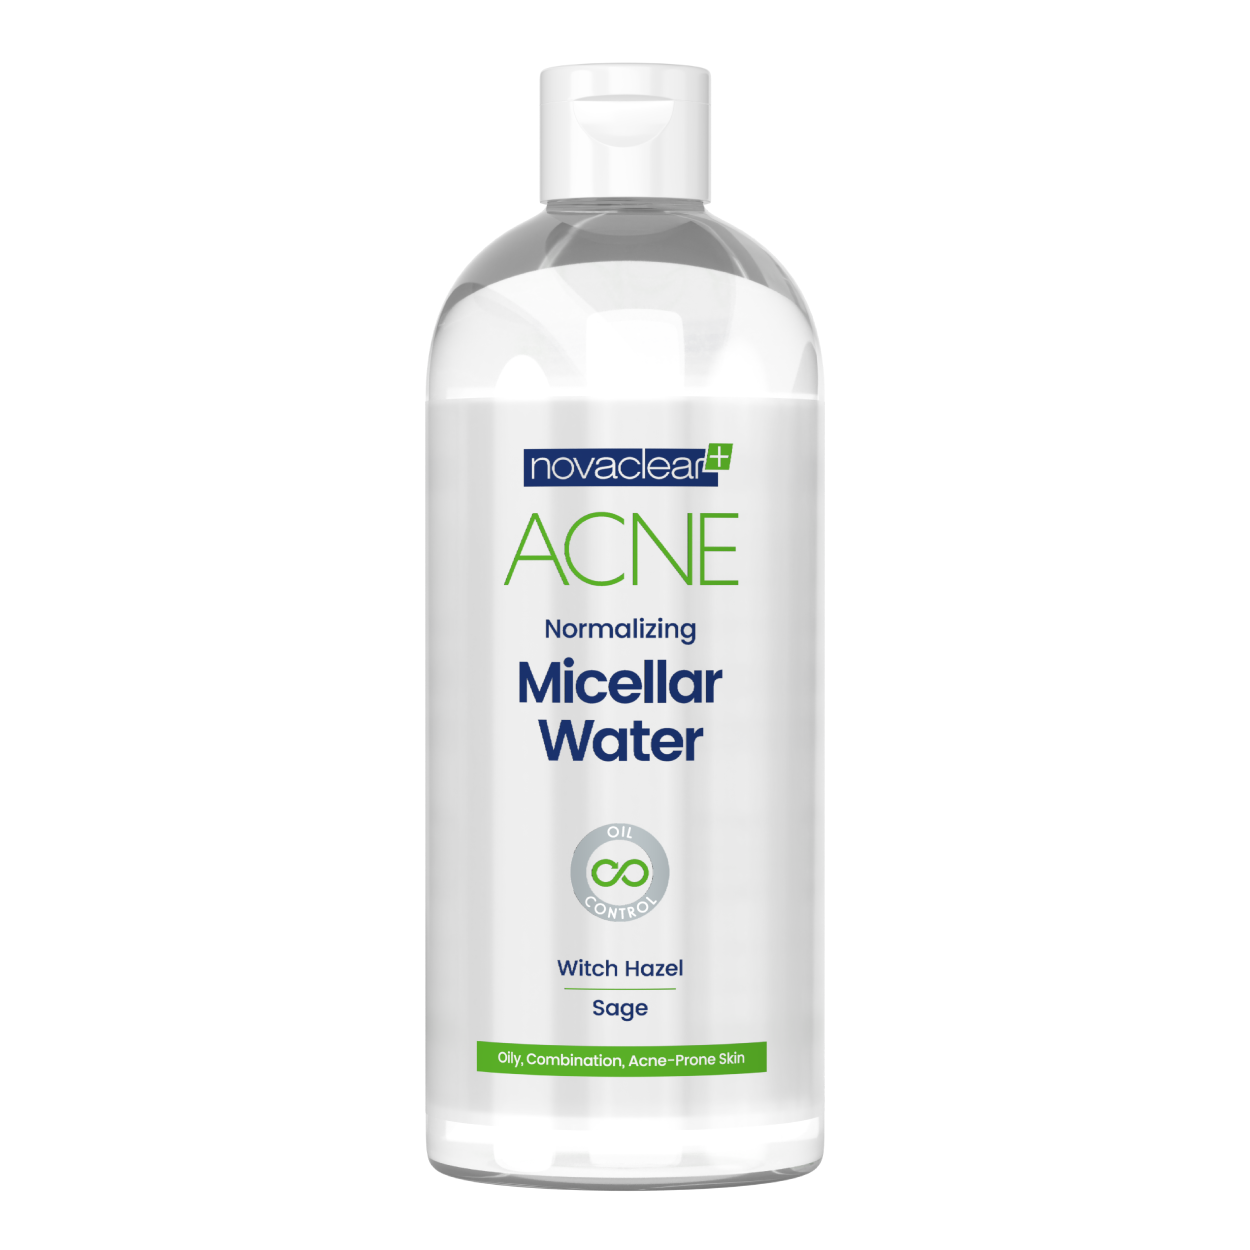 novaclear-acne-micellar-water